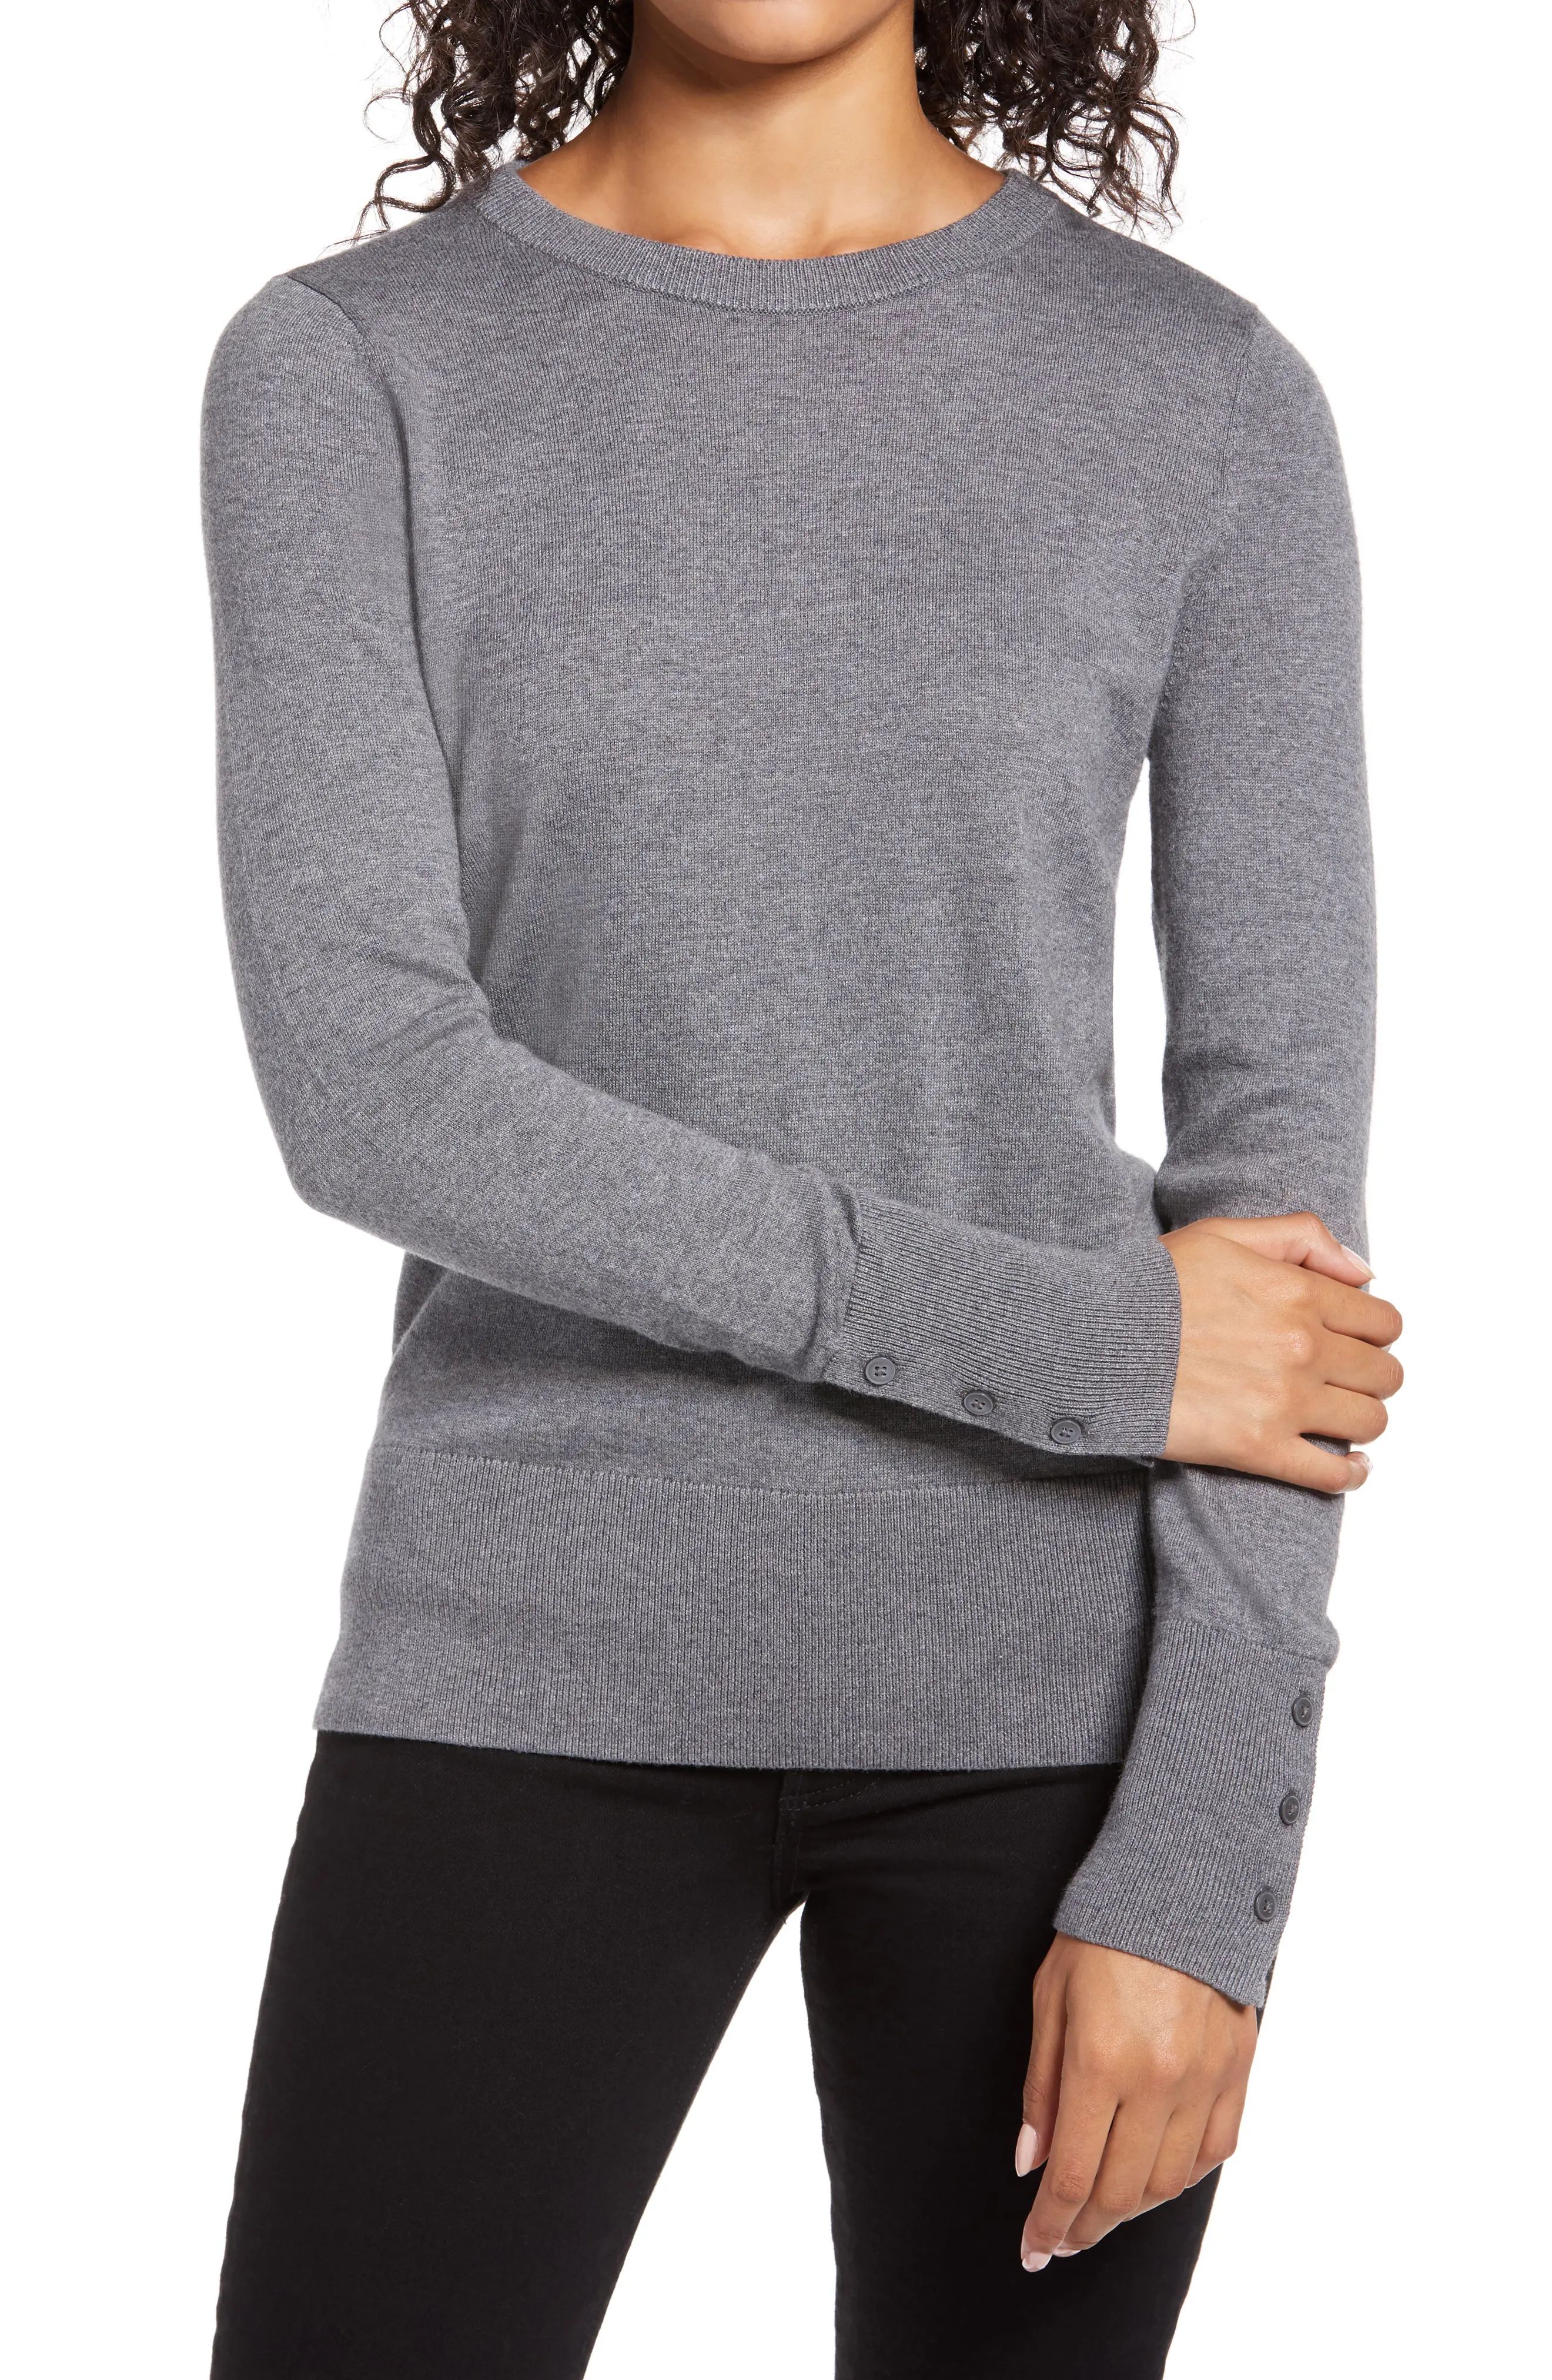 Halogen(R) Crewneck Sweater in Grey Dark Heather at Nordstrom, Size Small | Nordstrom